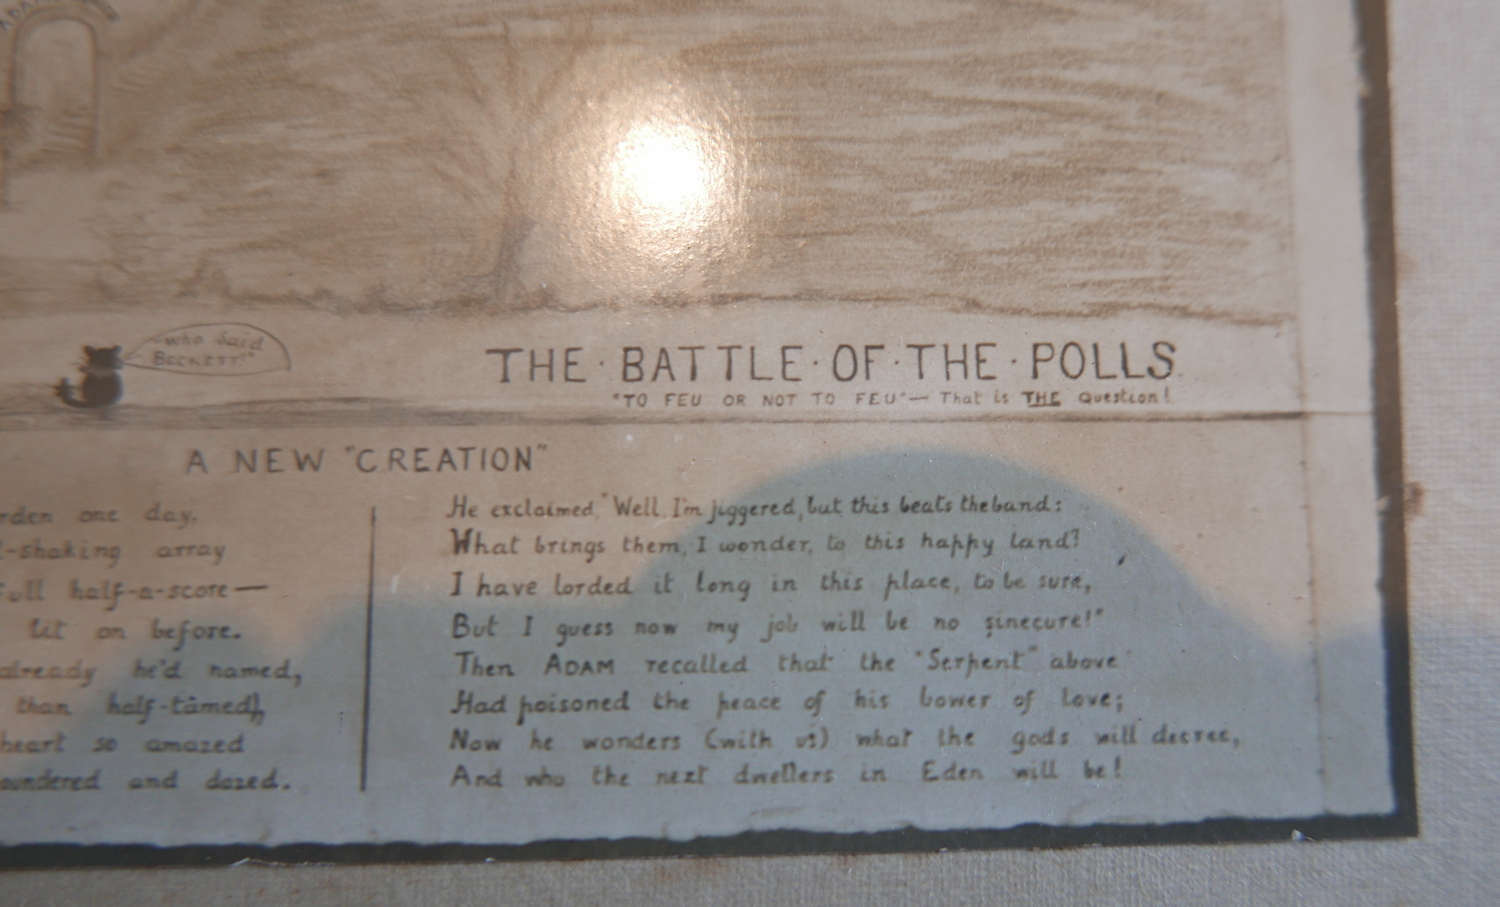 Antique c1900 Albumen Print Photo of The Battle of the Polls Religious Cartoon Banff-Scotland. - Image 6 of 6